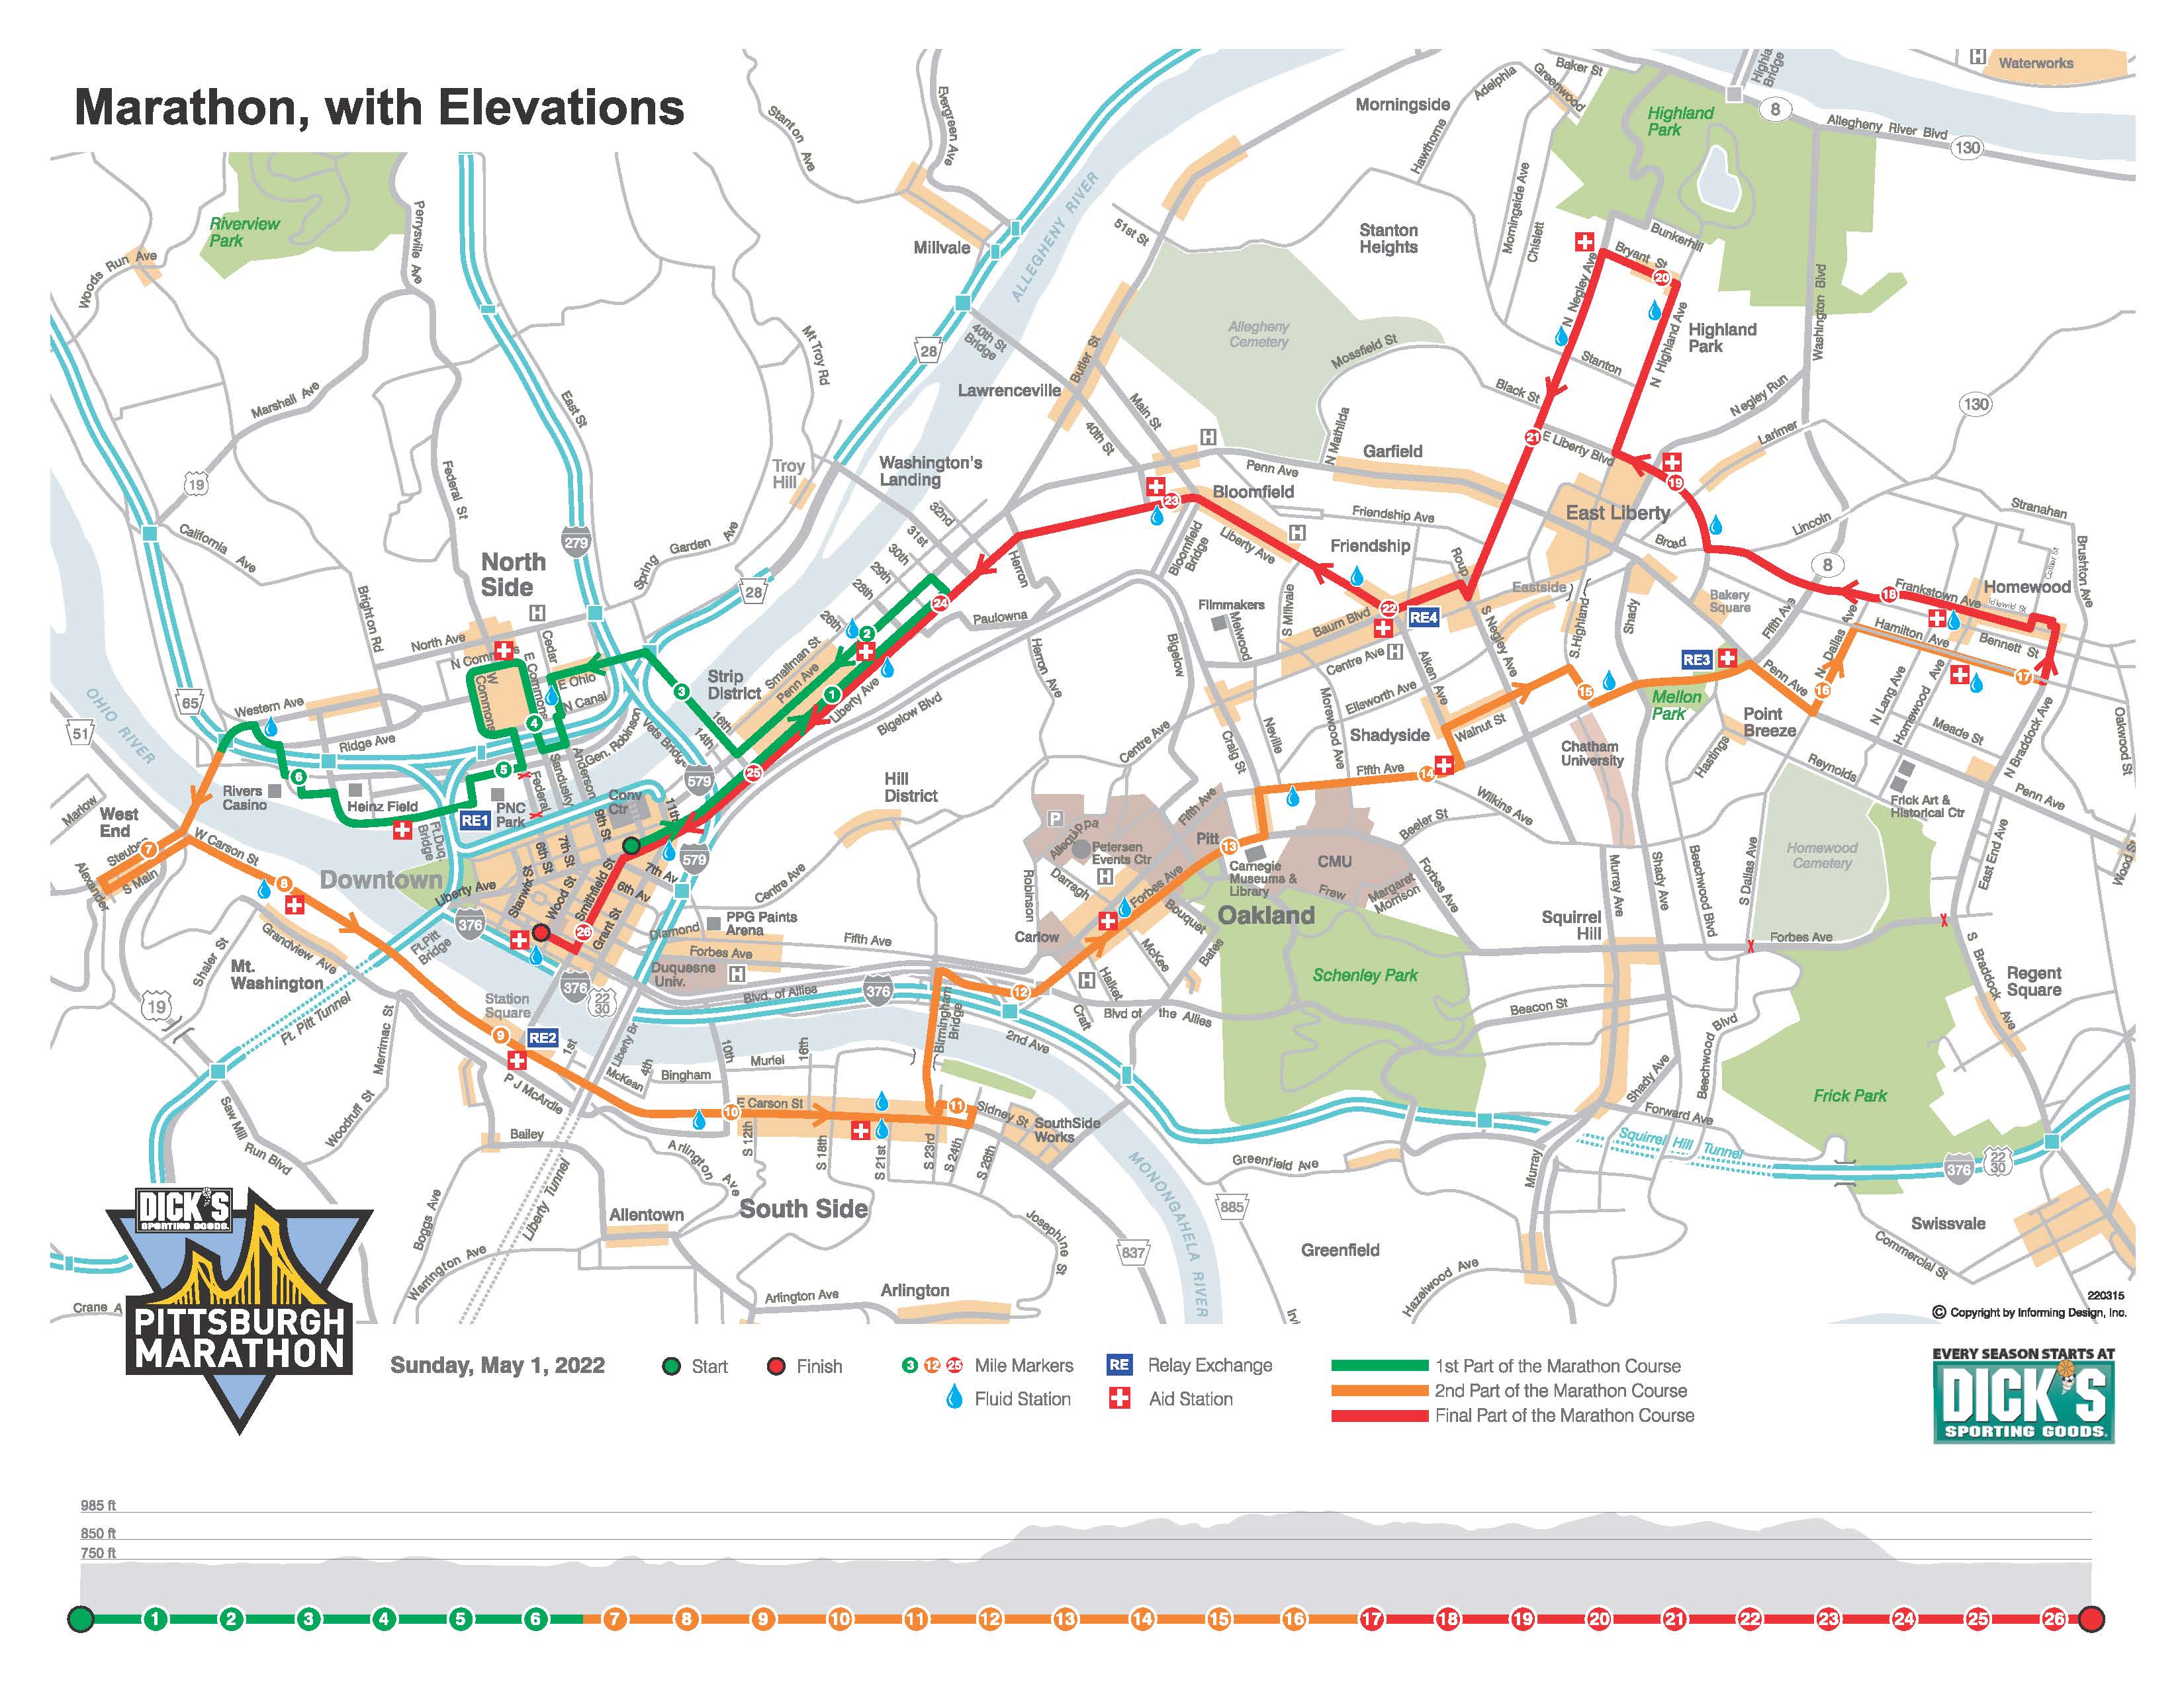 Pittsburgh Marathon 2022 Sunday Map